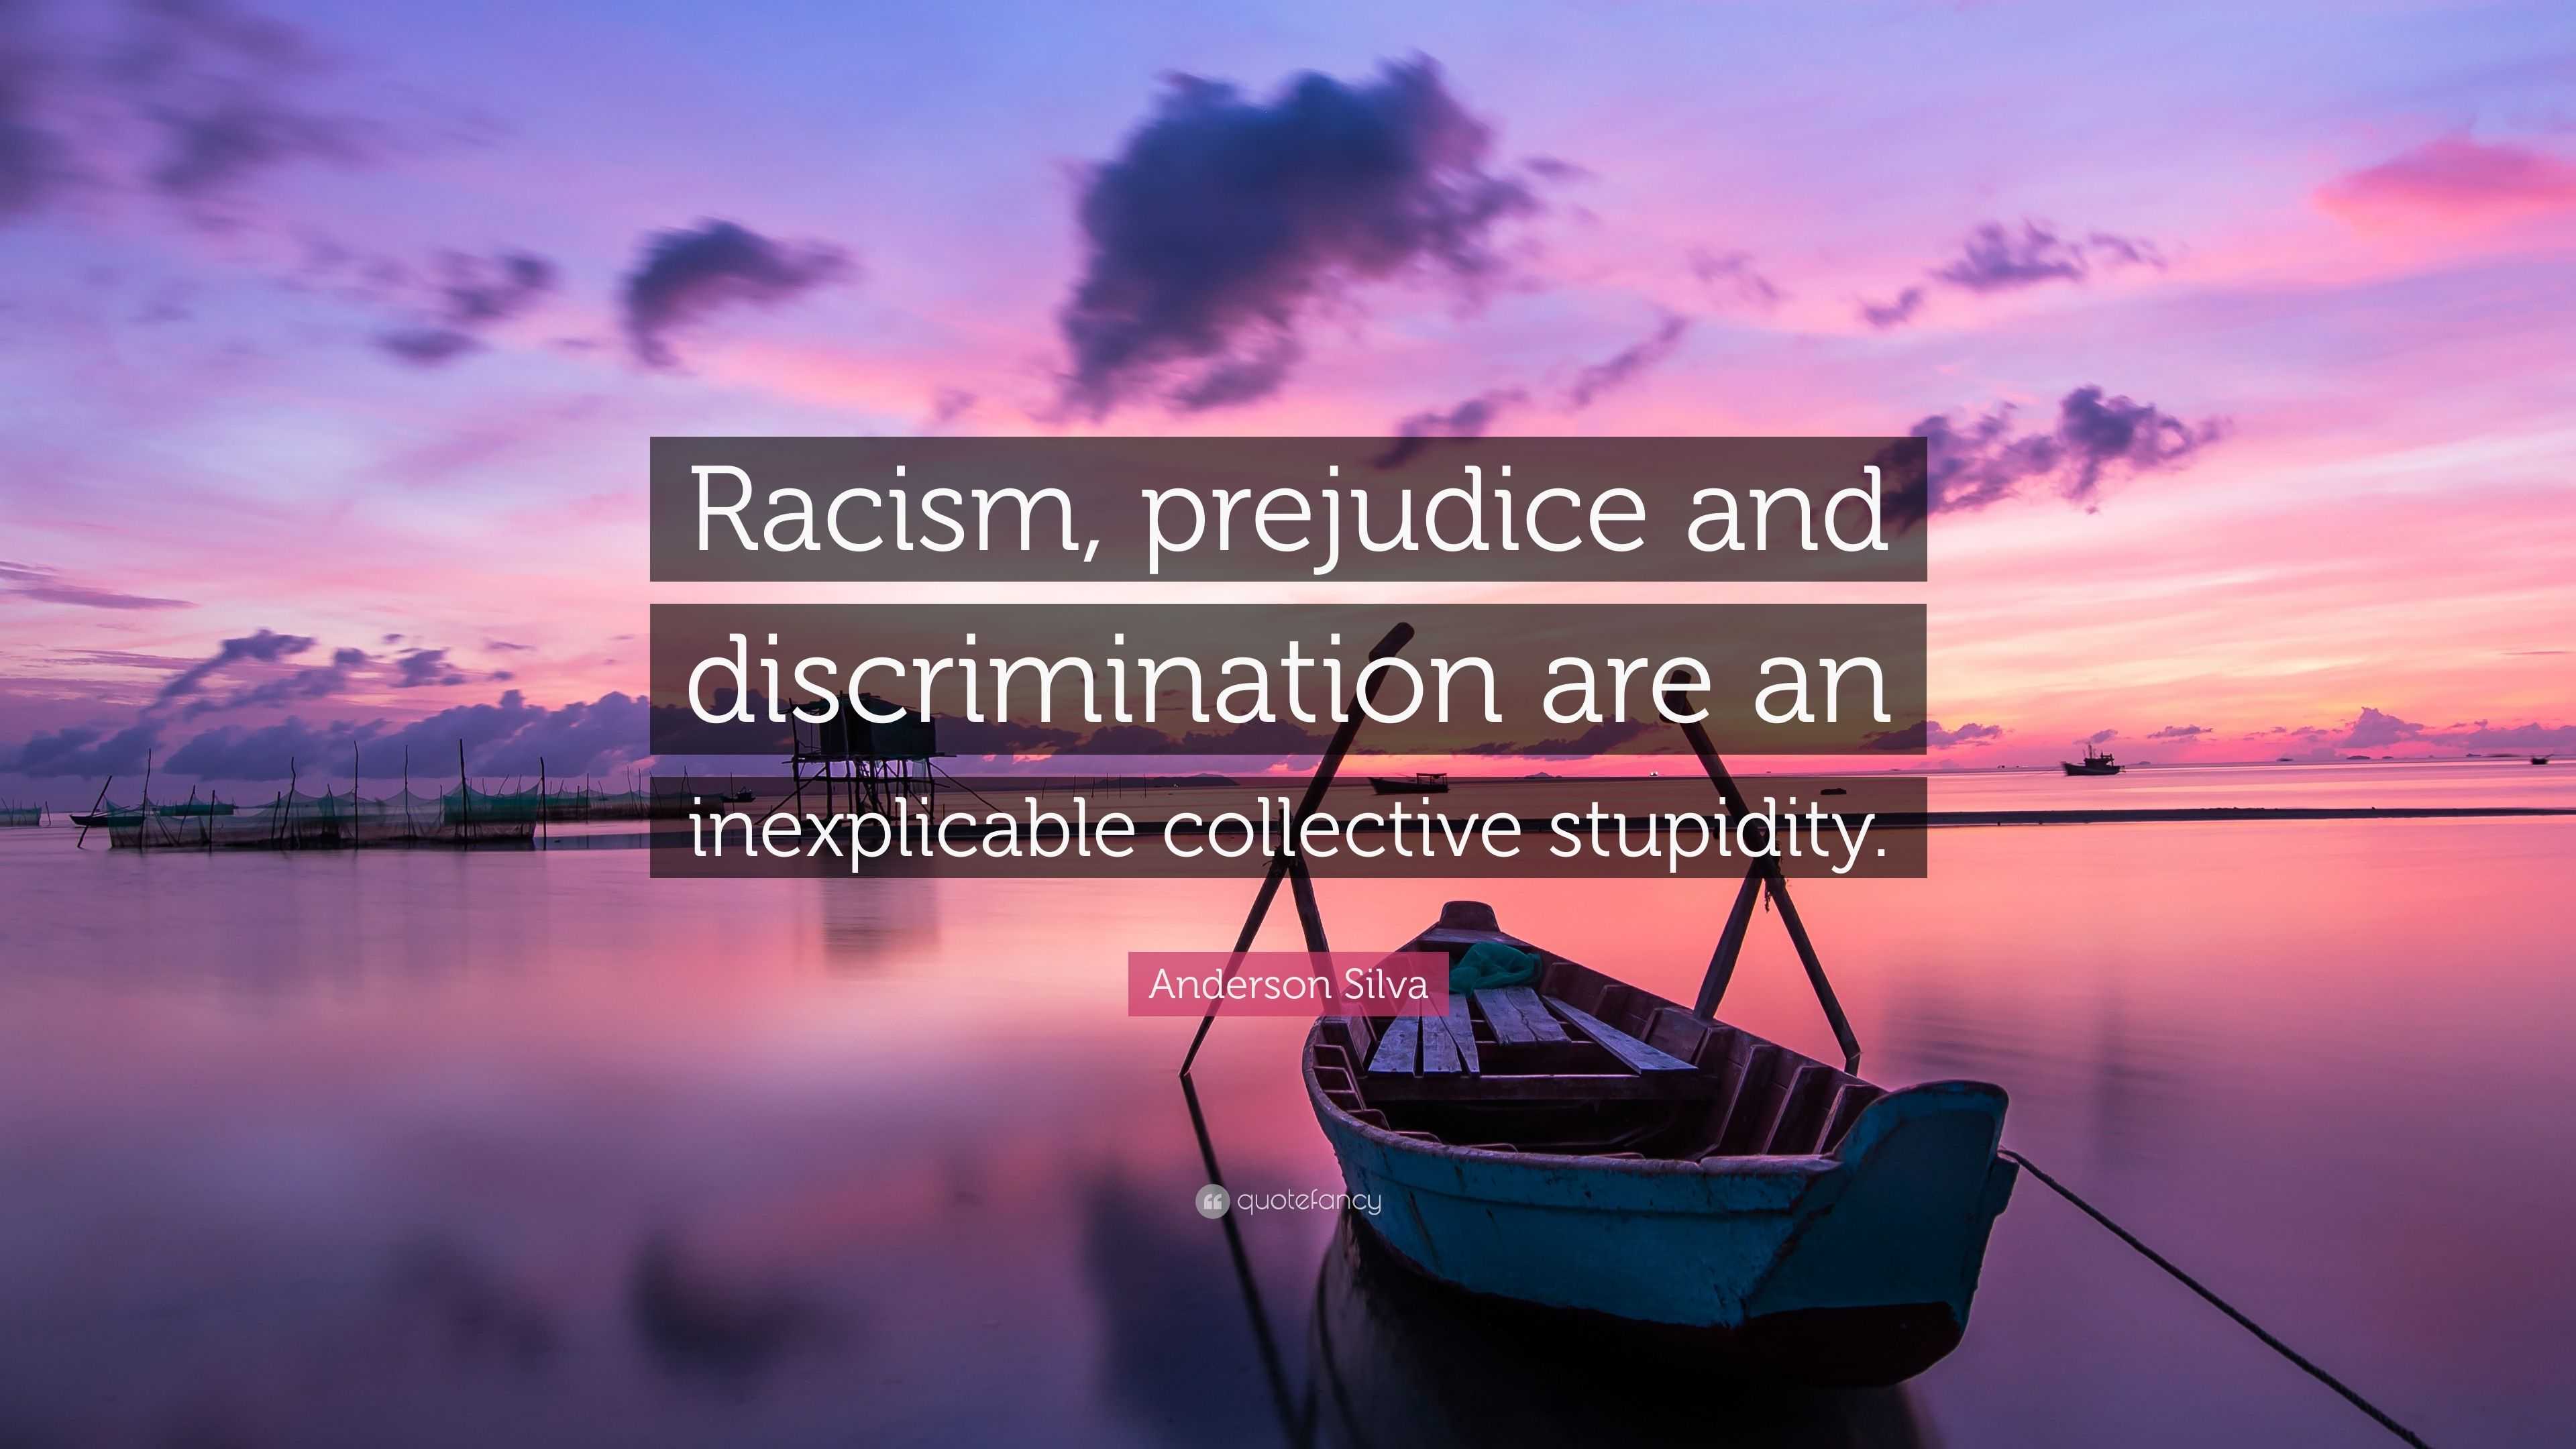 Anderson Silva Quote: "Racism, prejudice and ...